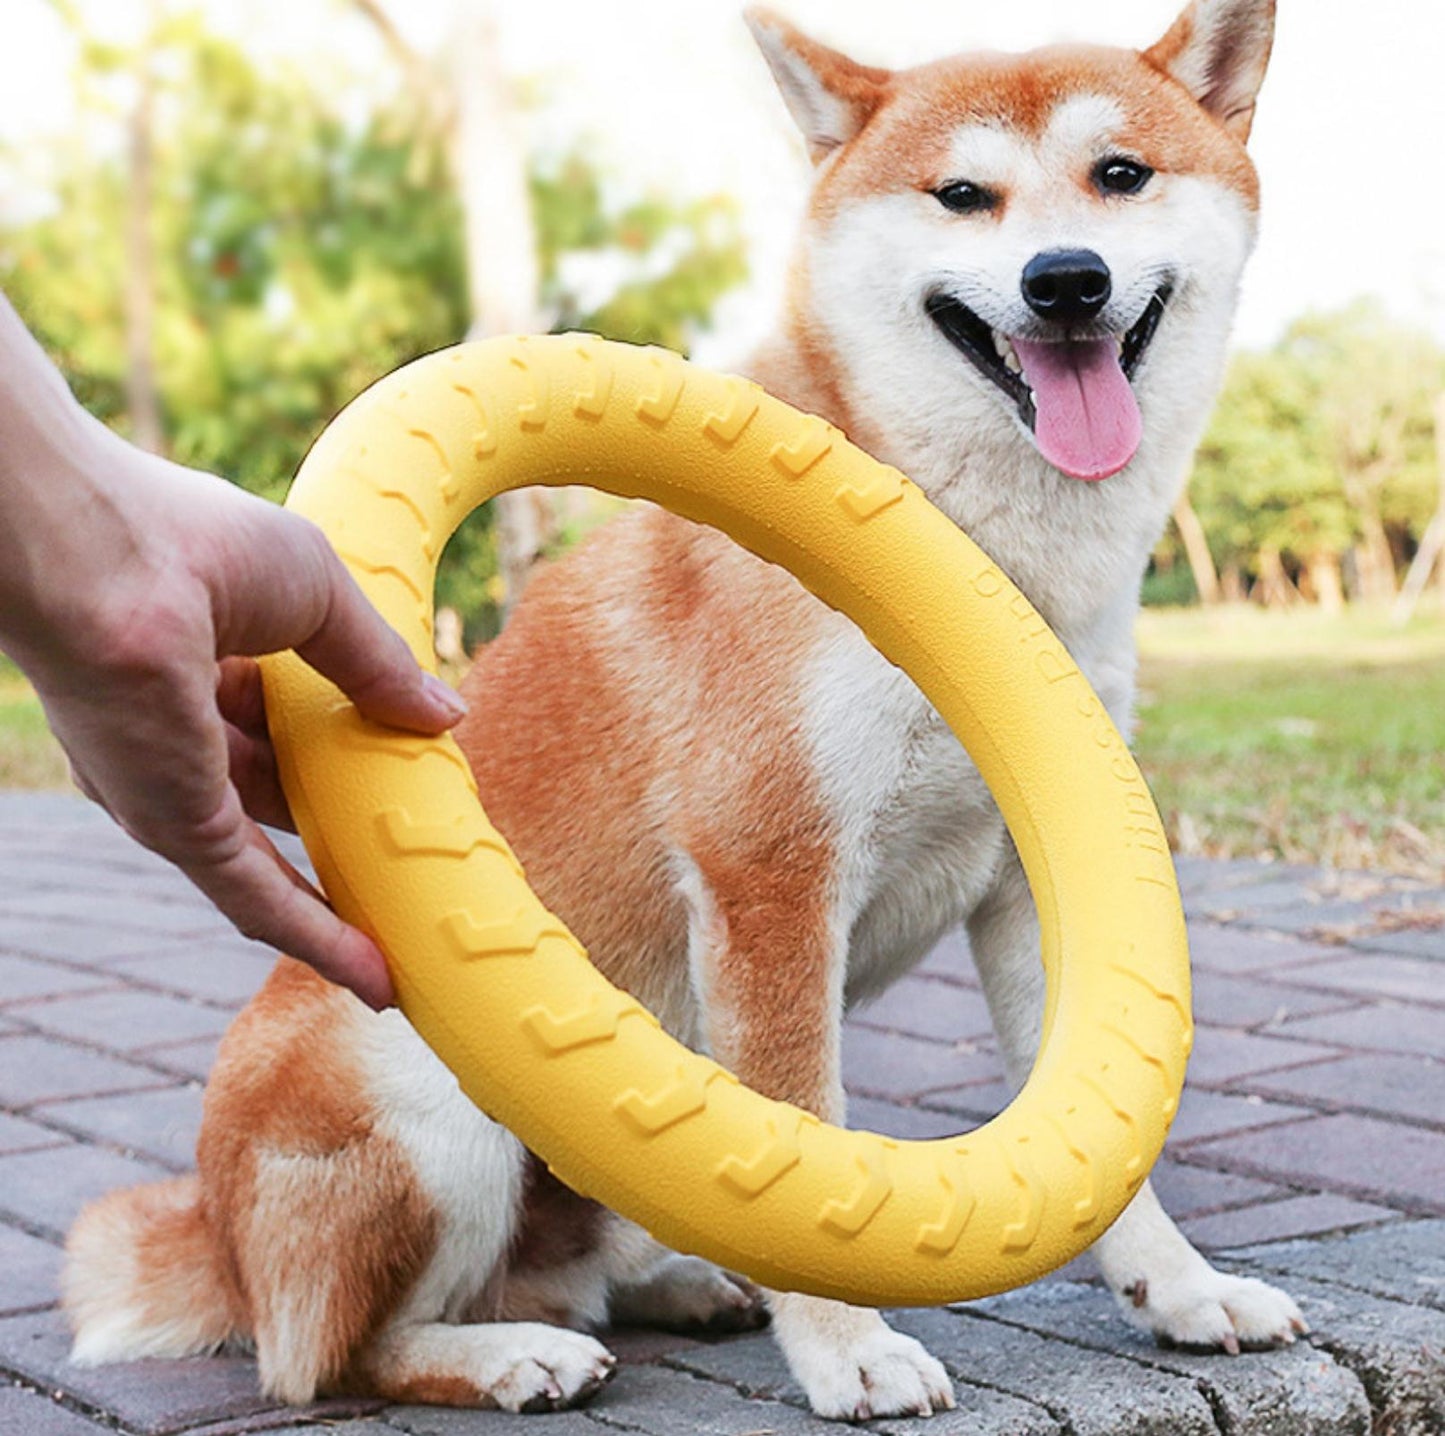 EVA Foam Dog Outdoor Training Toys - Ball & Tug Ring Styles